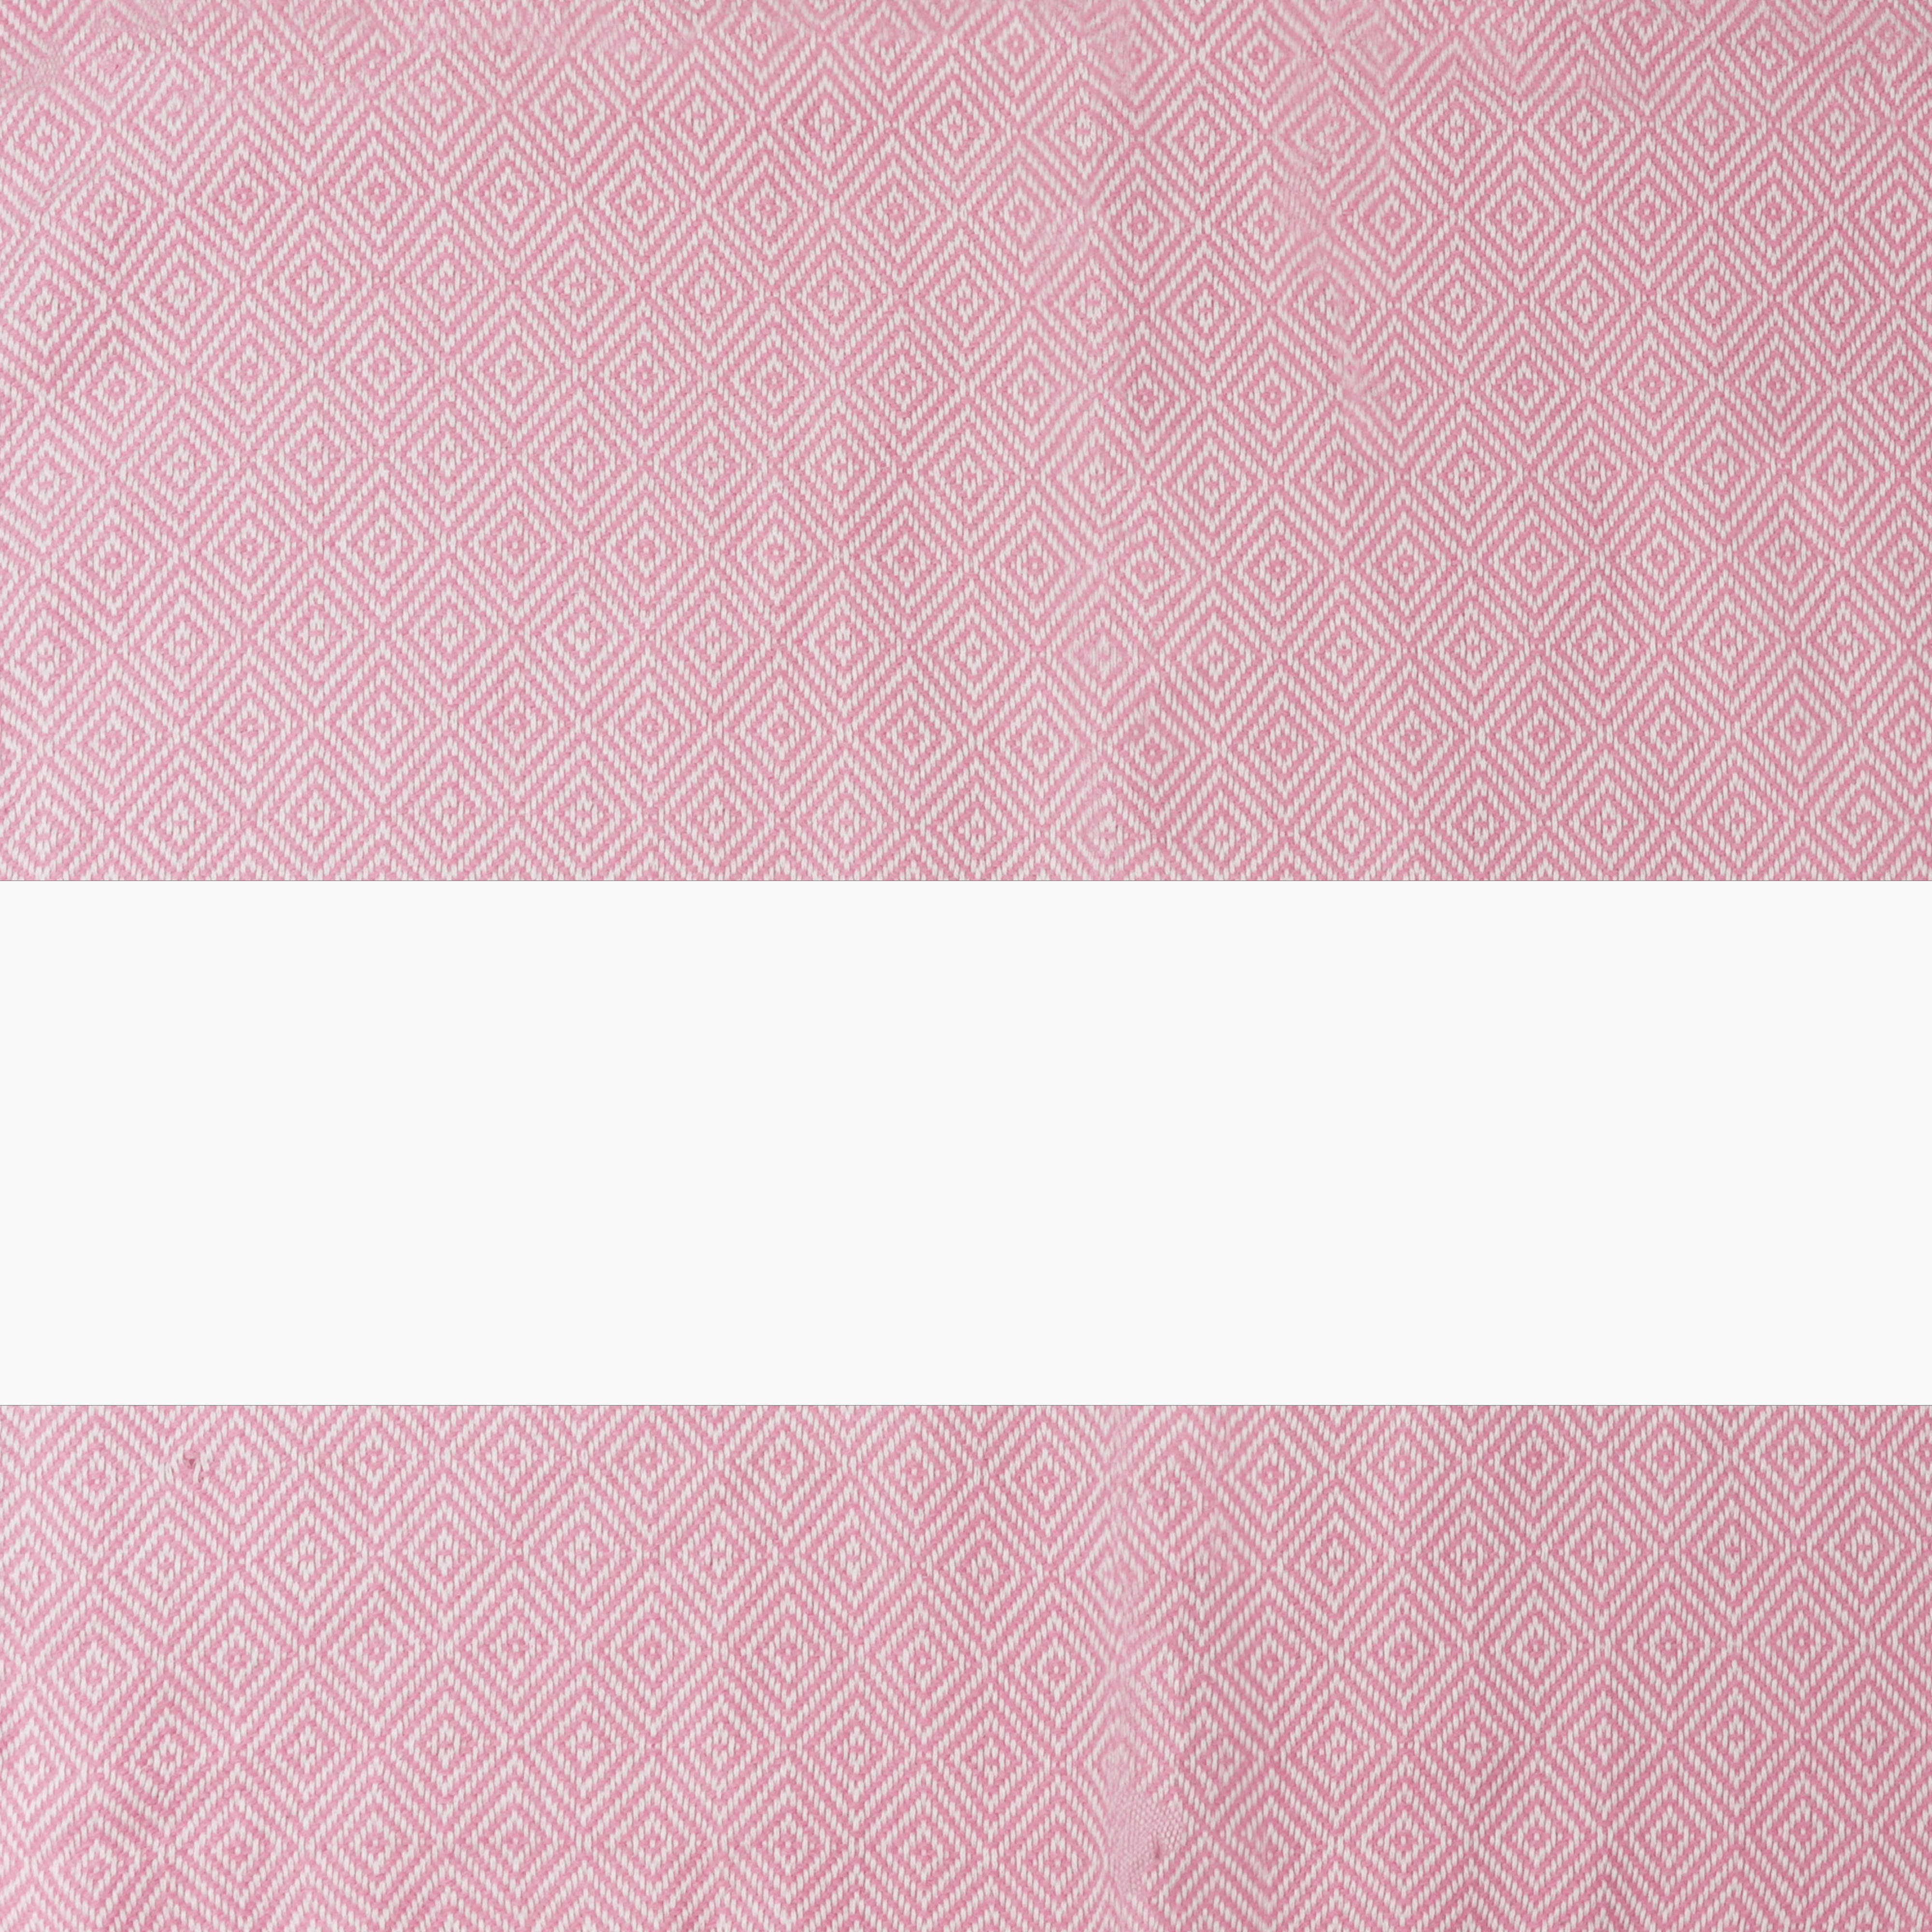 Hamam towel pink